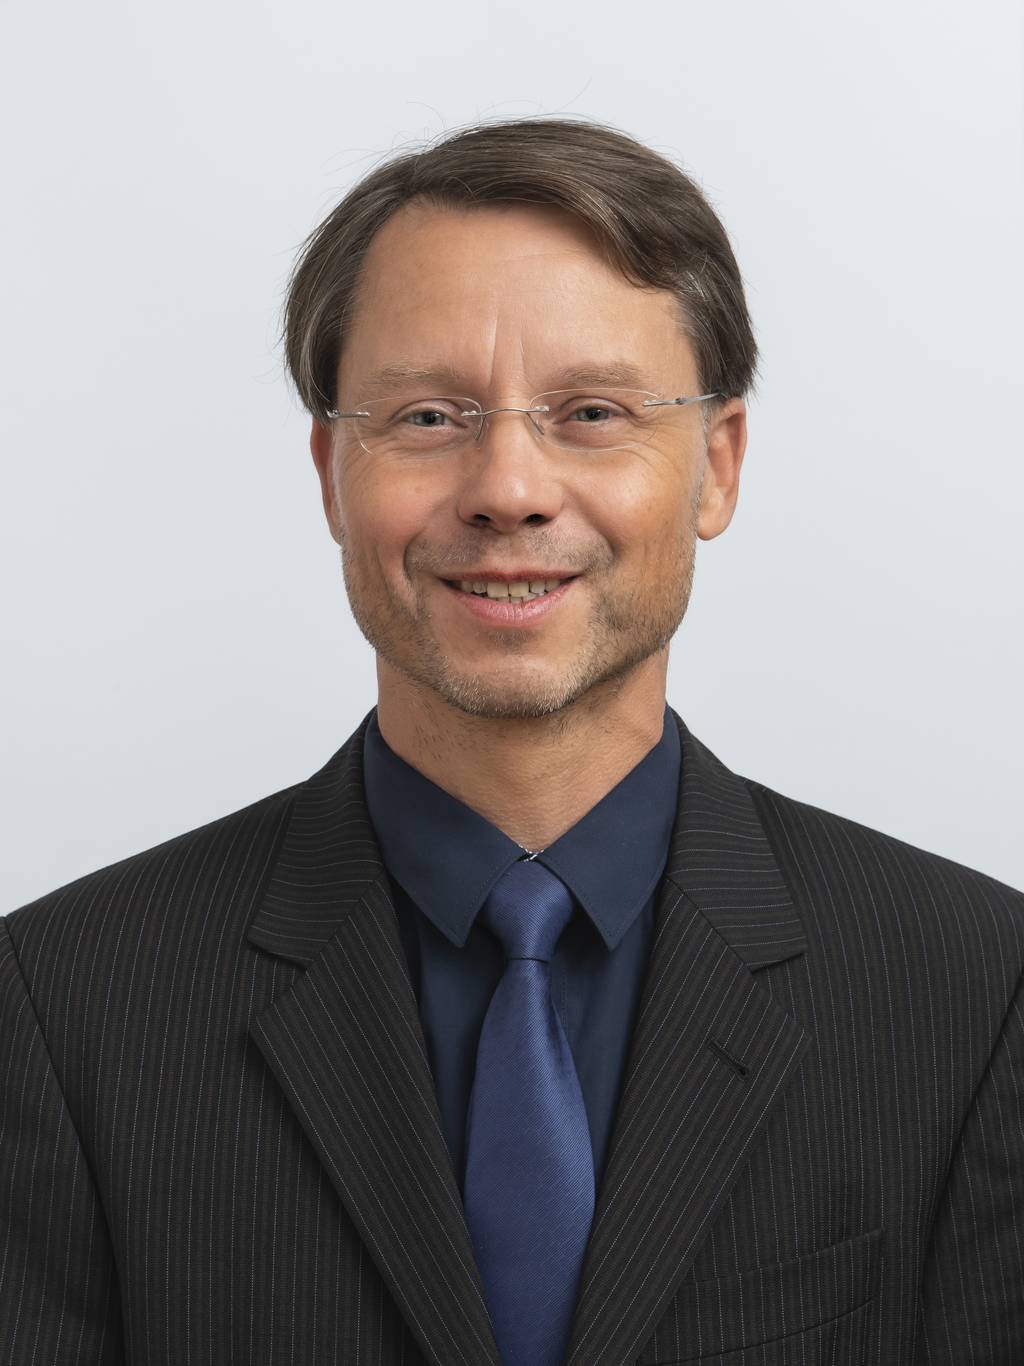 Ralf Hoßbach